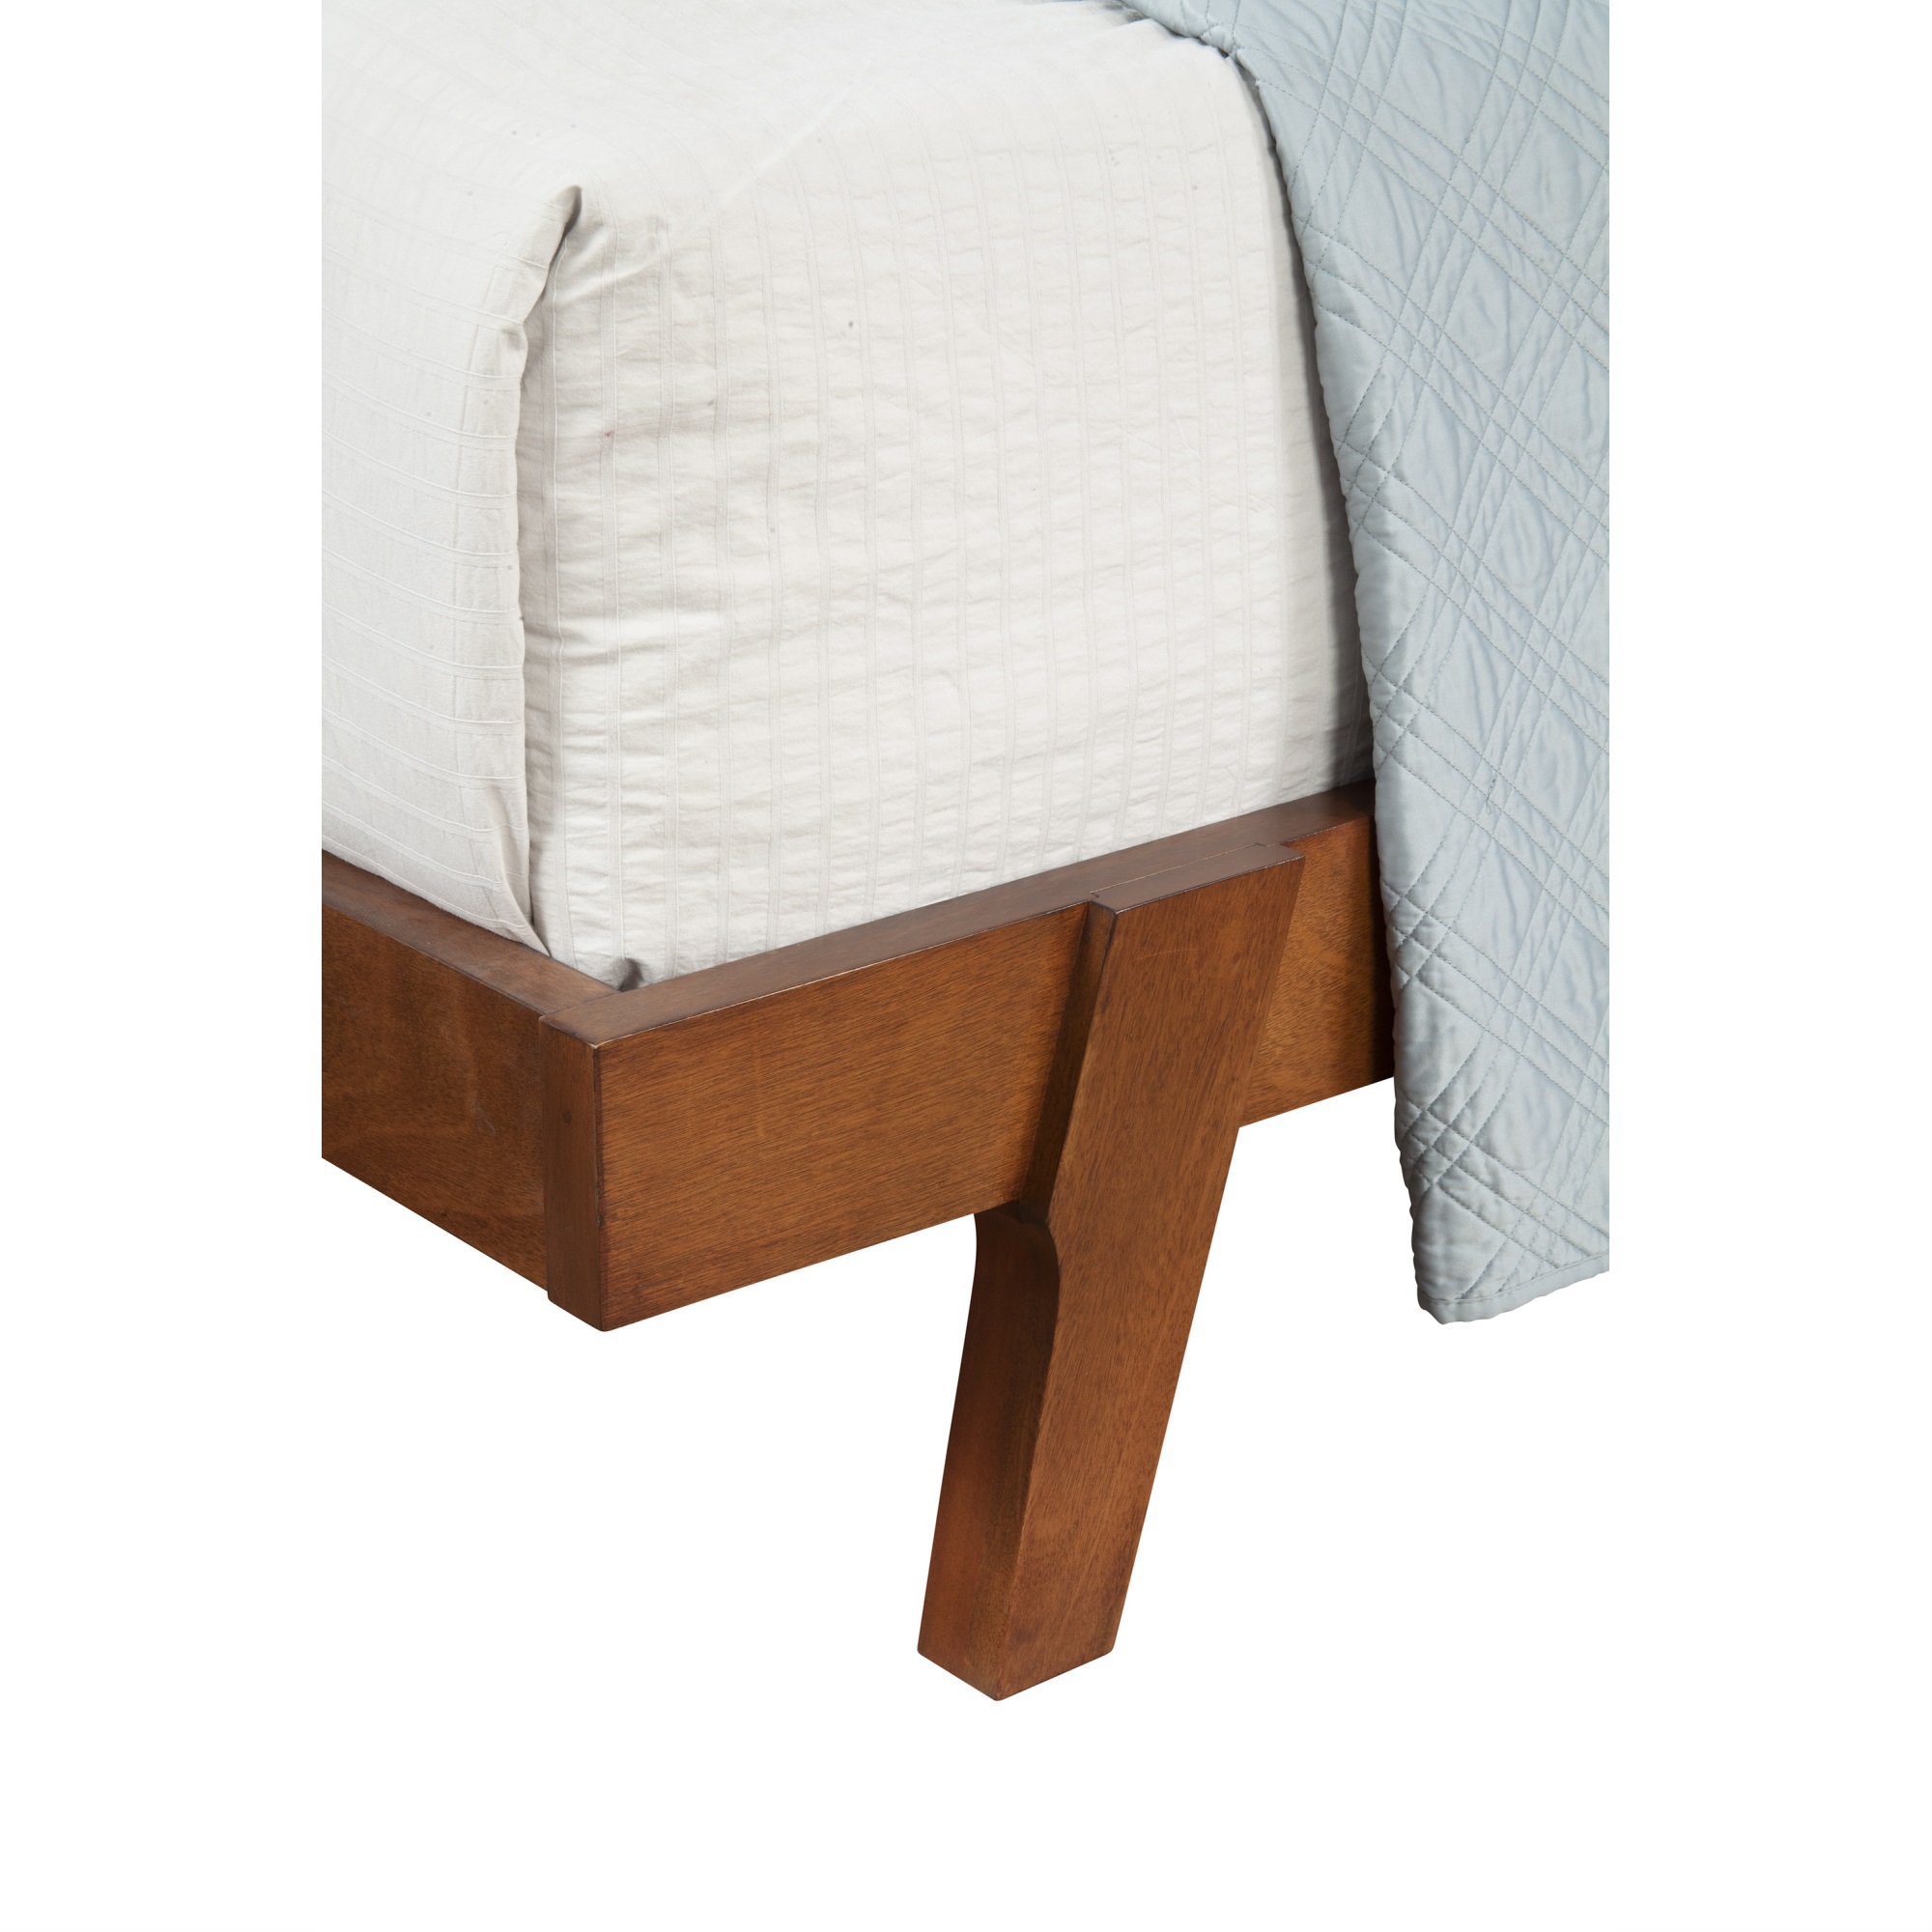 IDEAZ International LLC 1386APB Brown Sophisticated Full Size Platform Bed